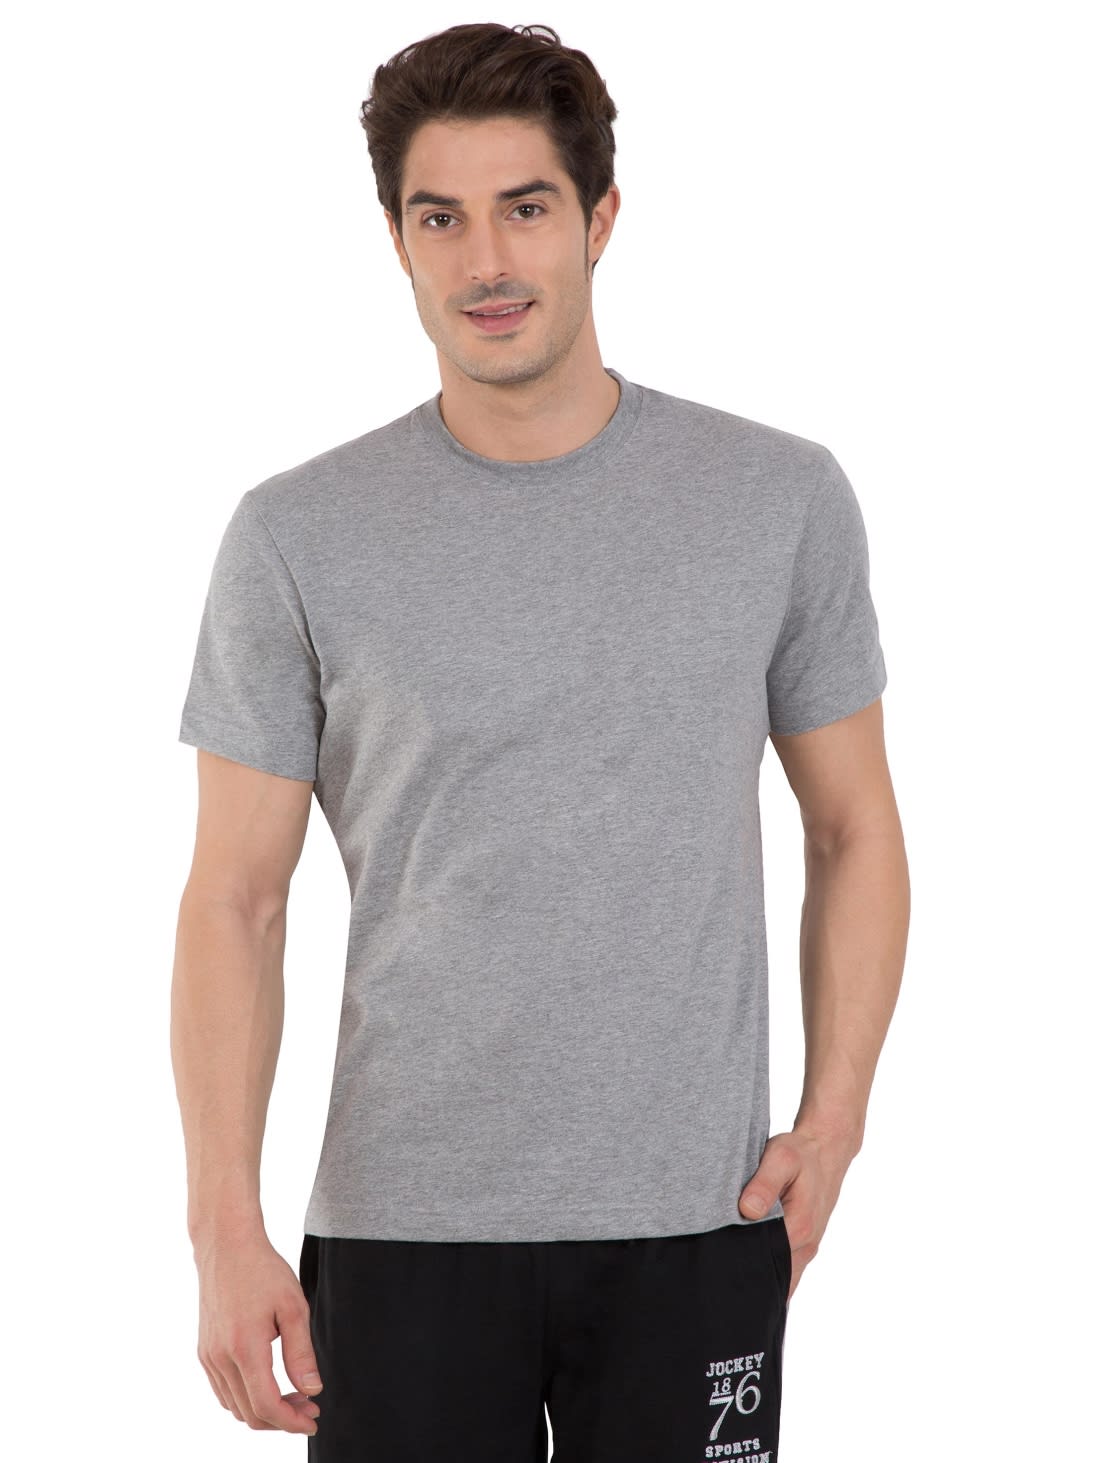 Download Jockey Men Apparel Tops | Grey Melange Sport T-Shirt